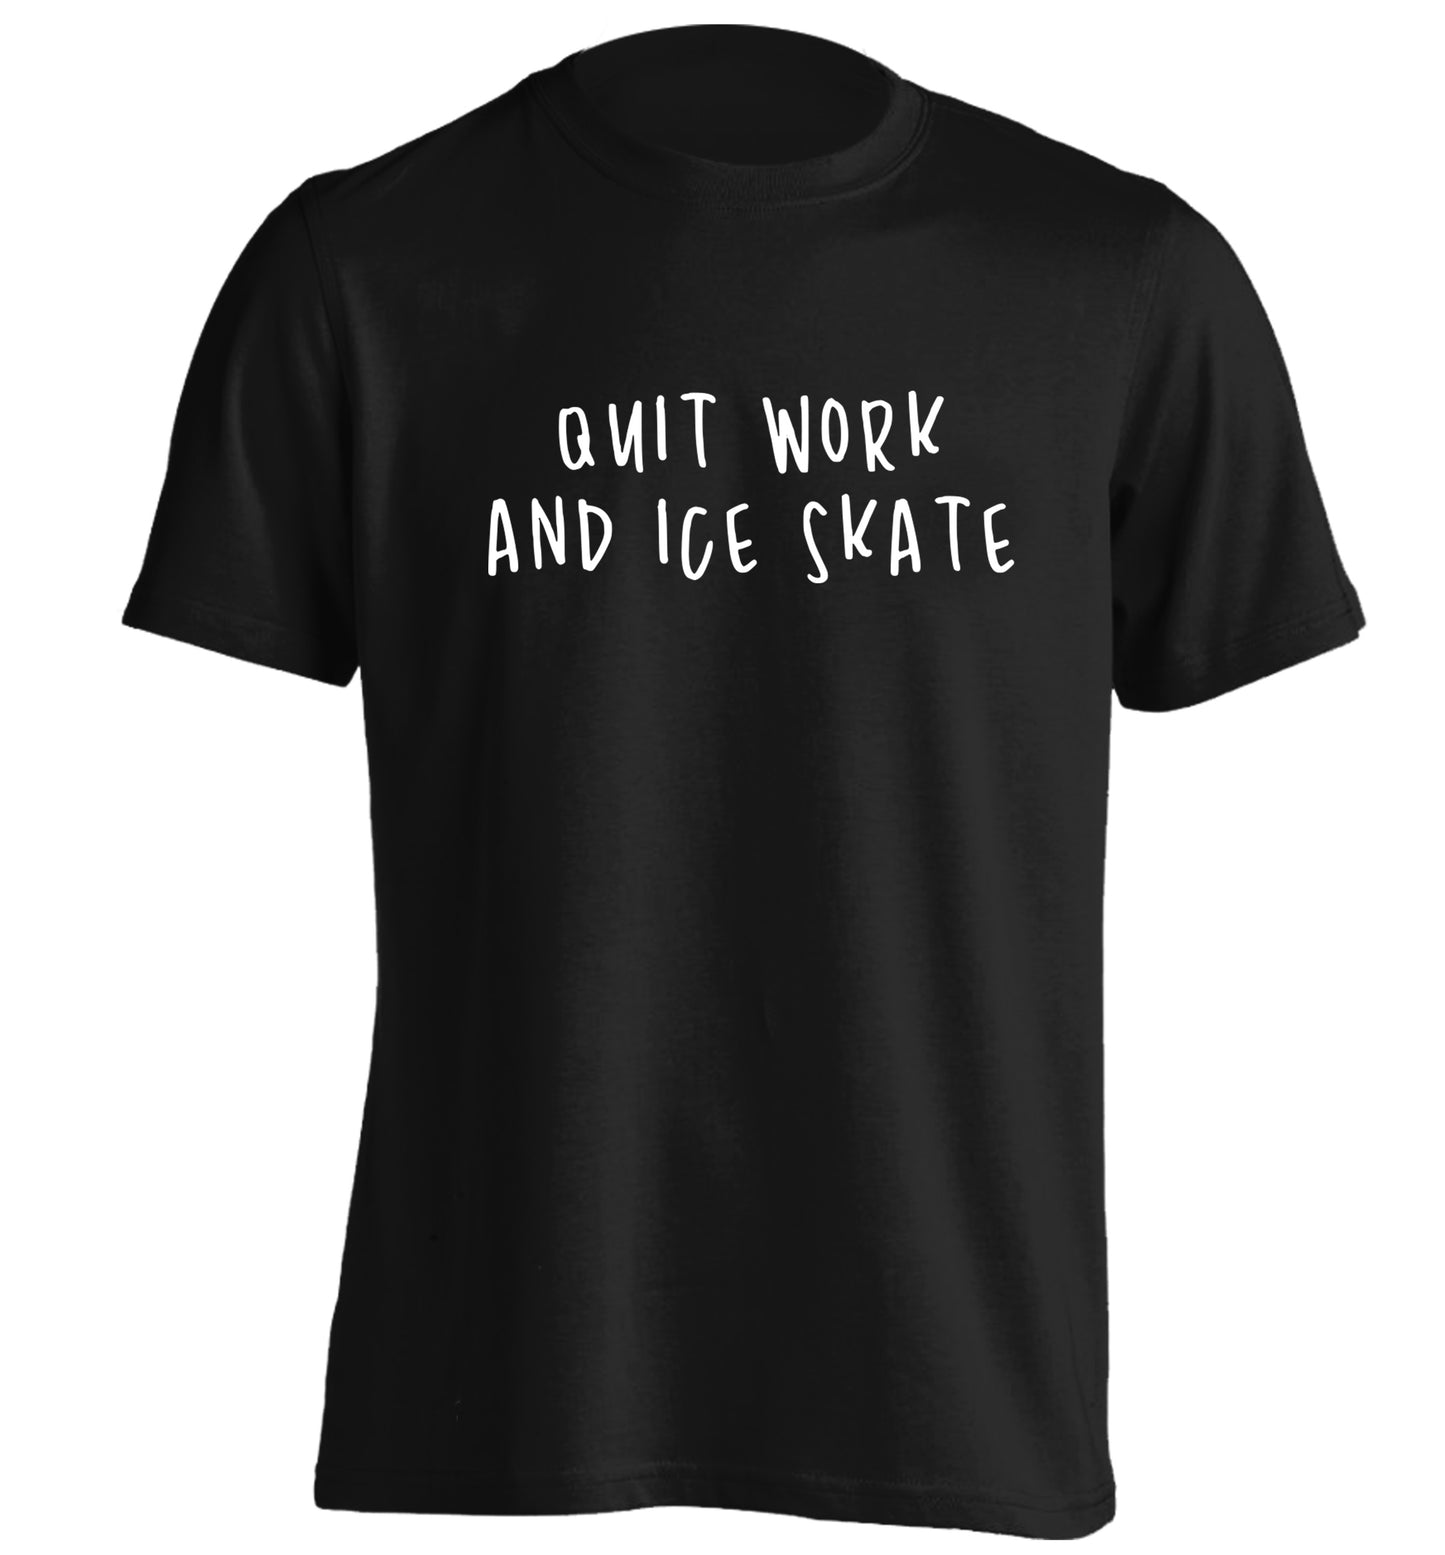 Quit work ice skate adults unisexblack Tshirt 2XL